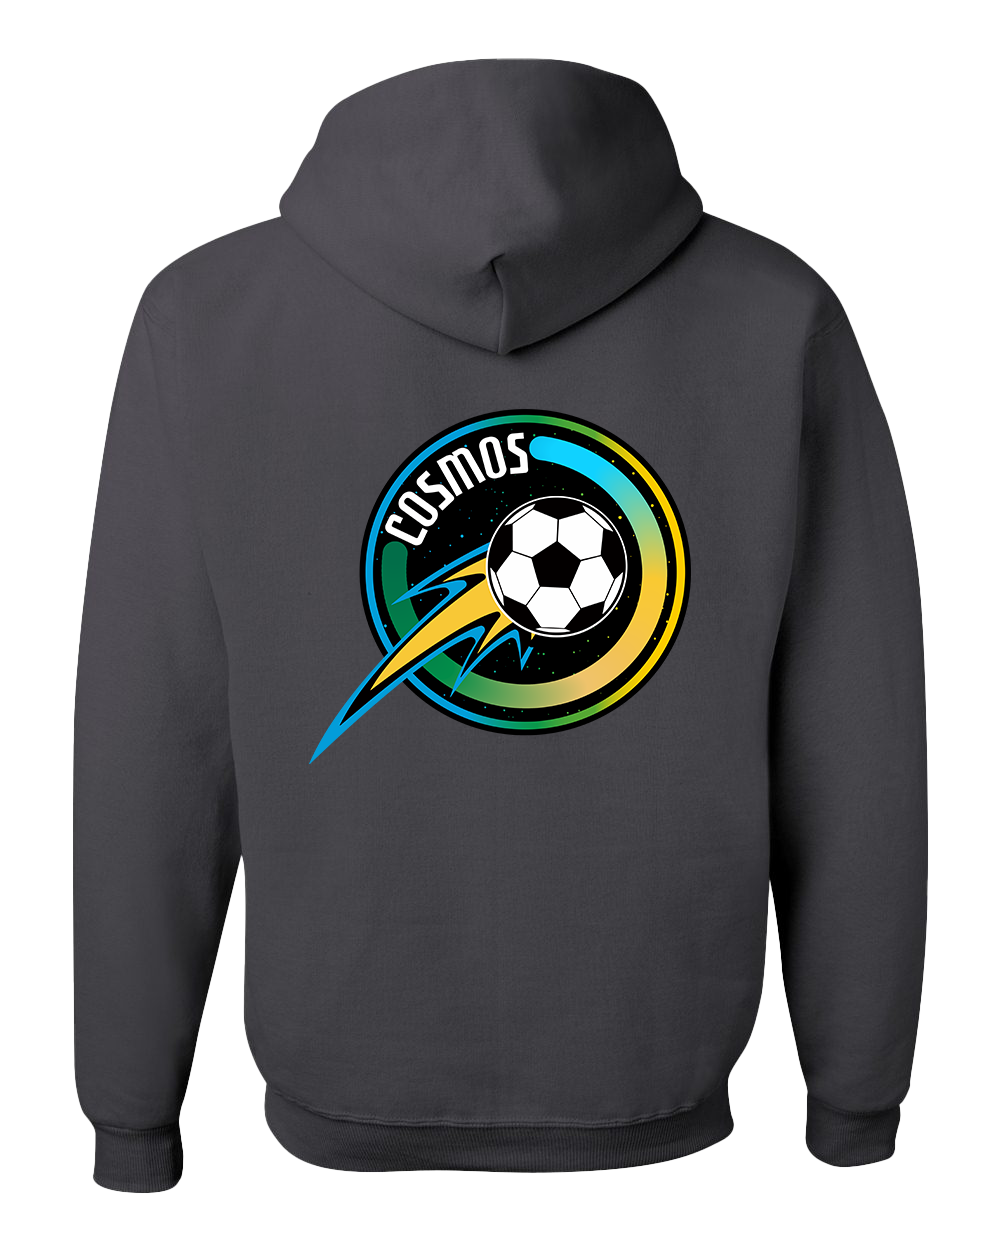 Cosmos Adult Hooded Sweatshirt